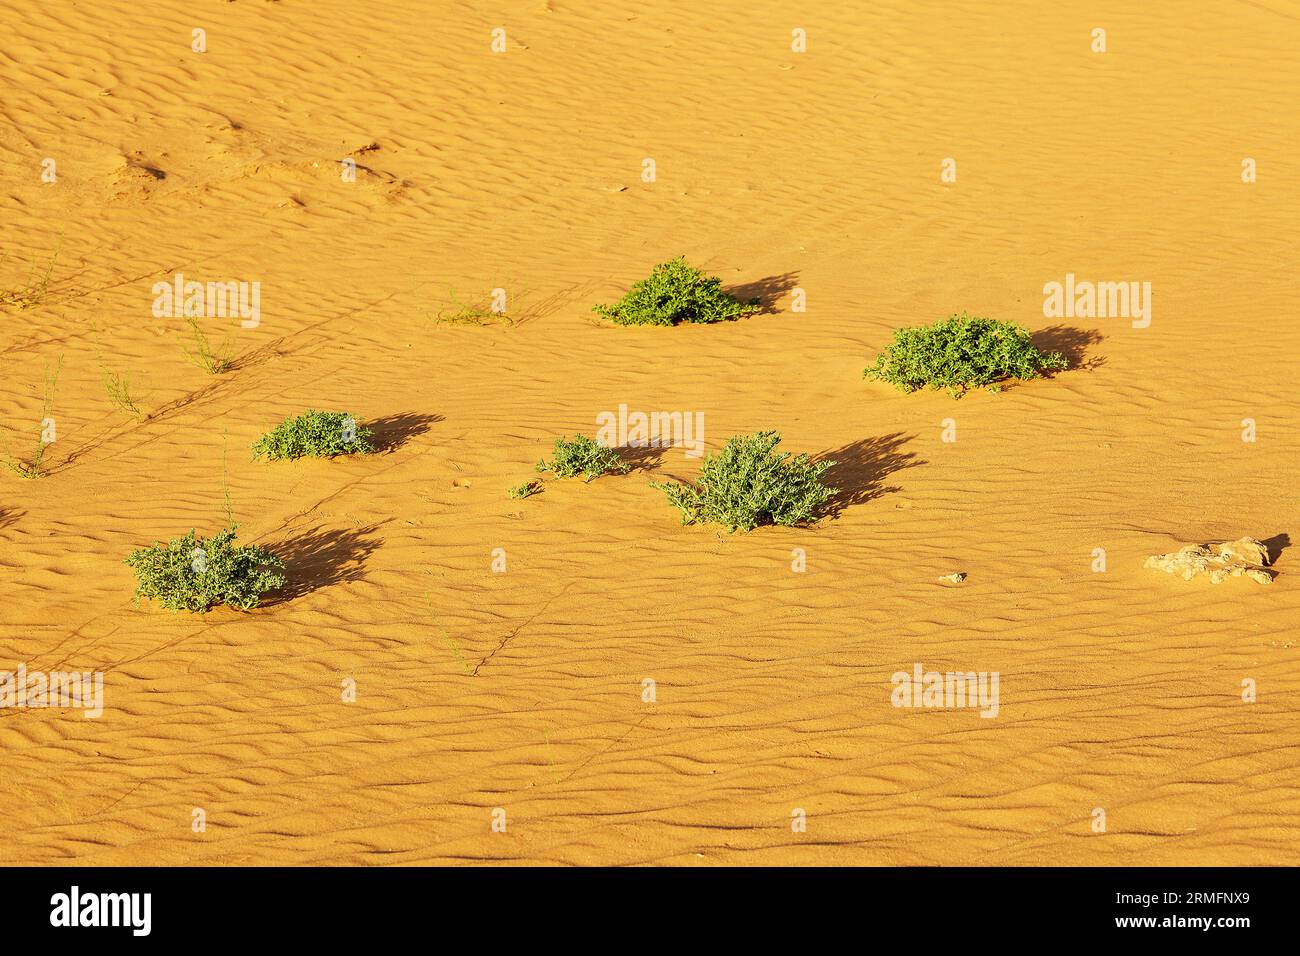 Grüne Pflanzen wachsen in Sanddünen in der Sahara, Merzouga, Marokko Stockfoto